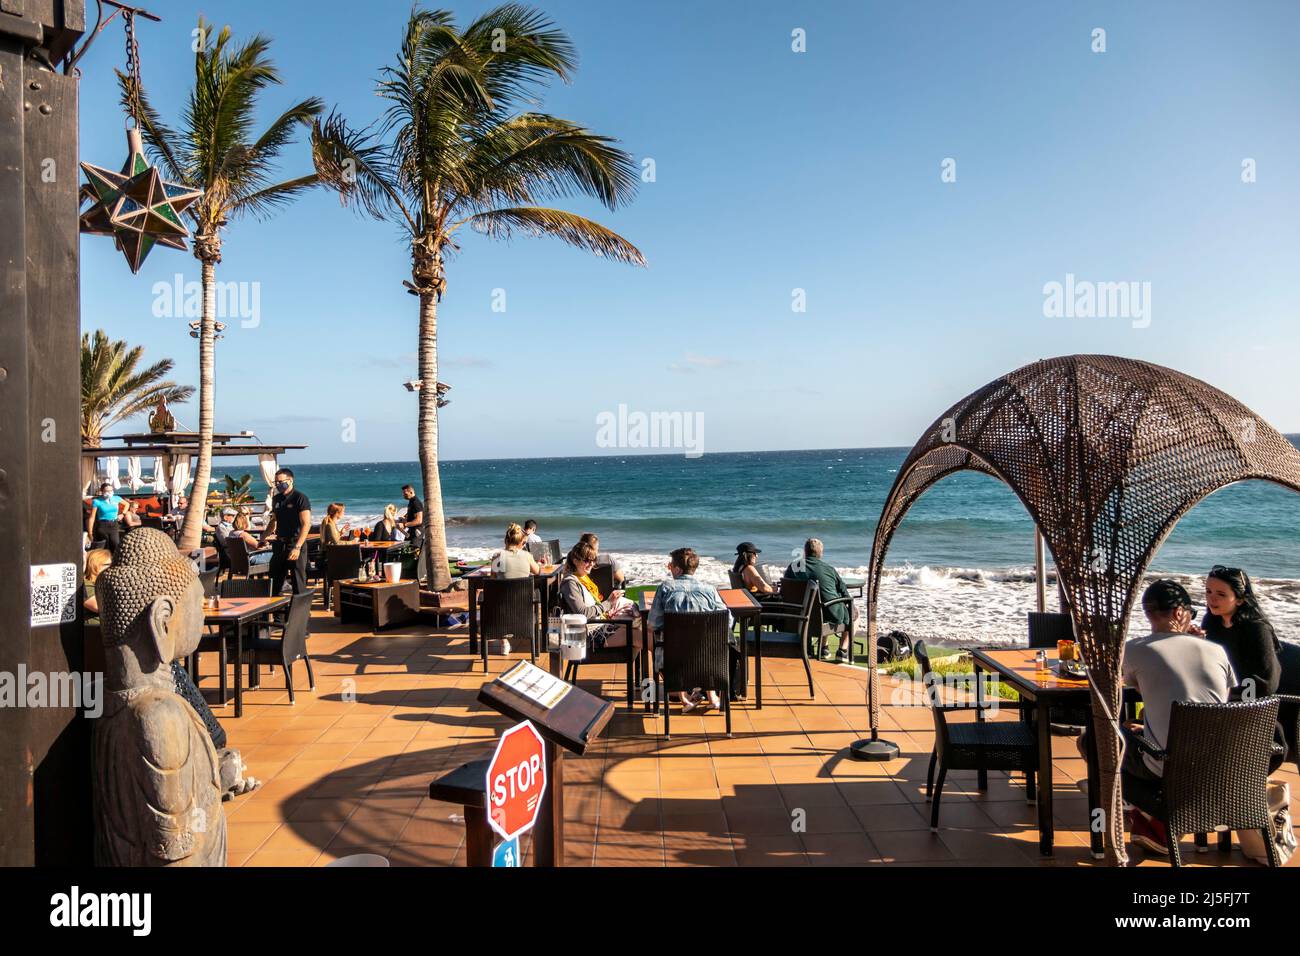 Restaurant la Ola, Terasse mit Meeresblick, Lanzarote, Kanarische Inseln, Kanaren, Espagnol Banque D'Images